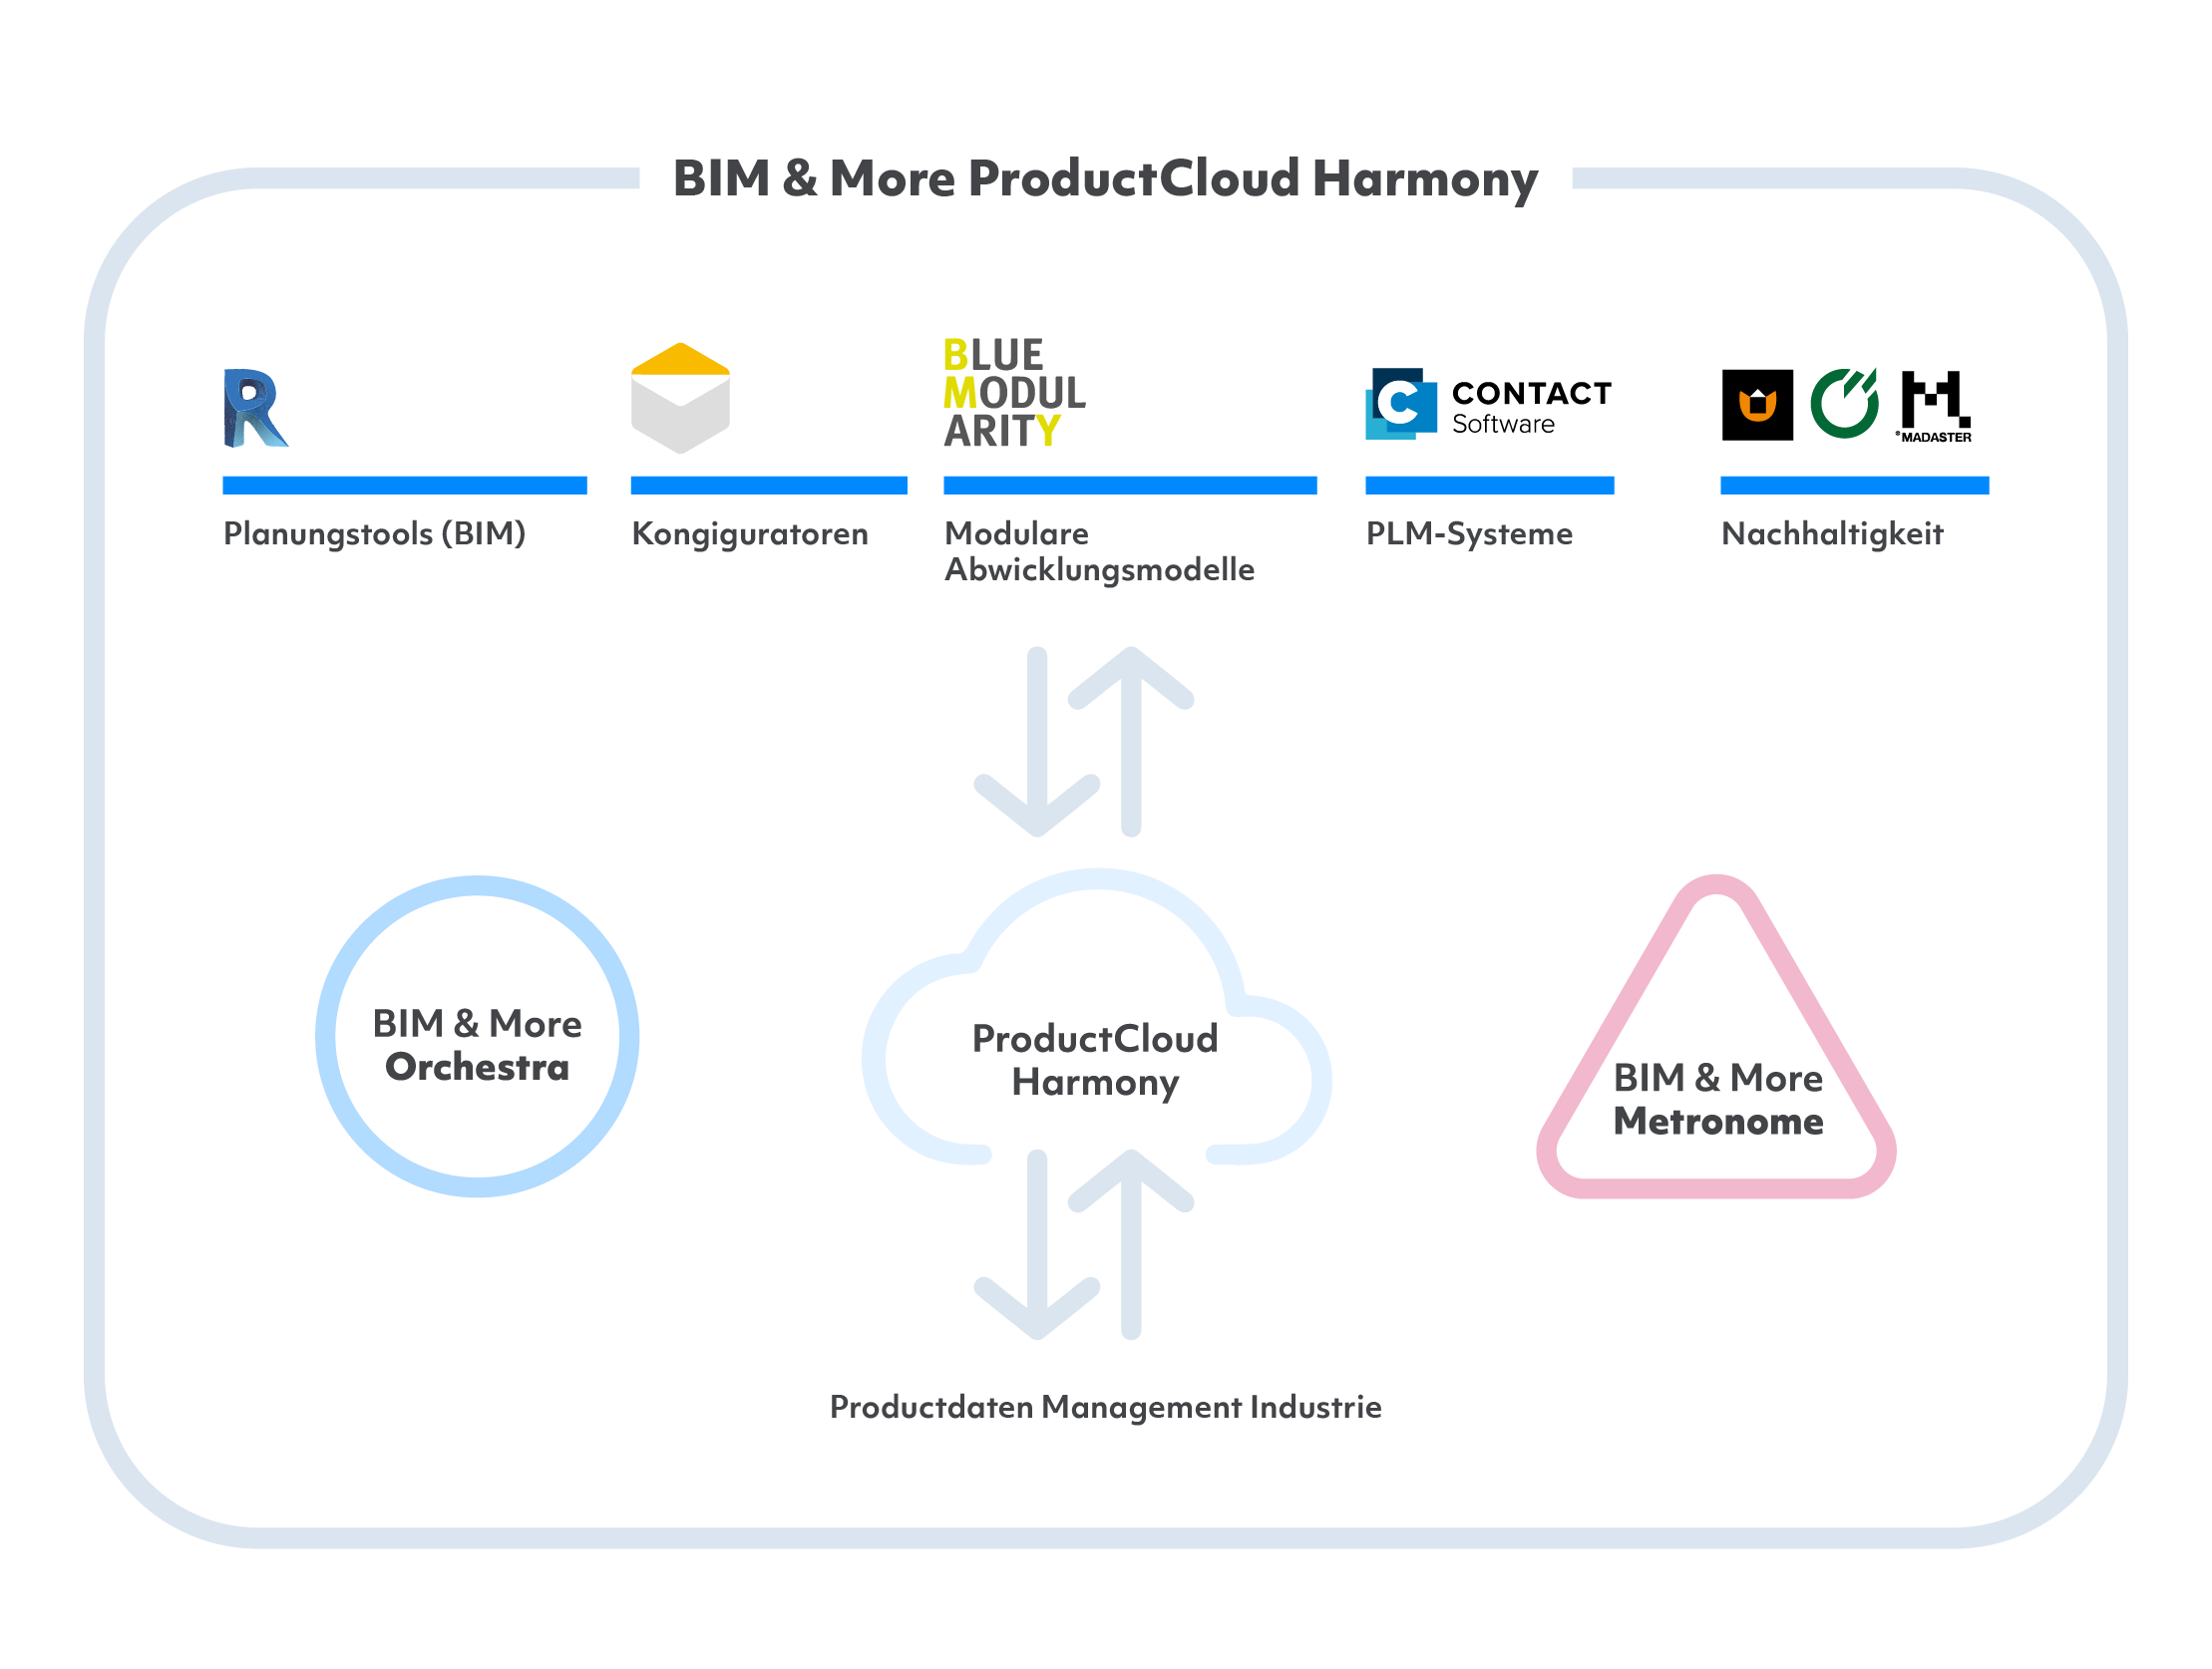 Product Cloud Harmony